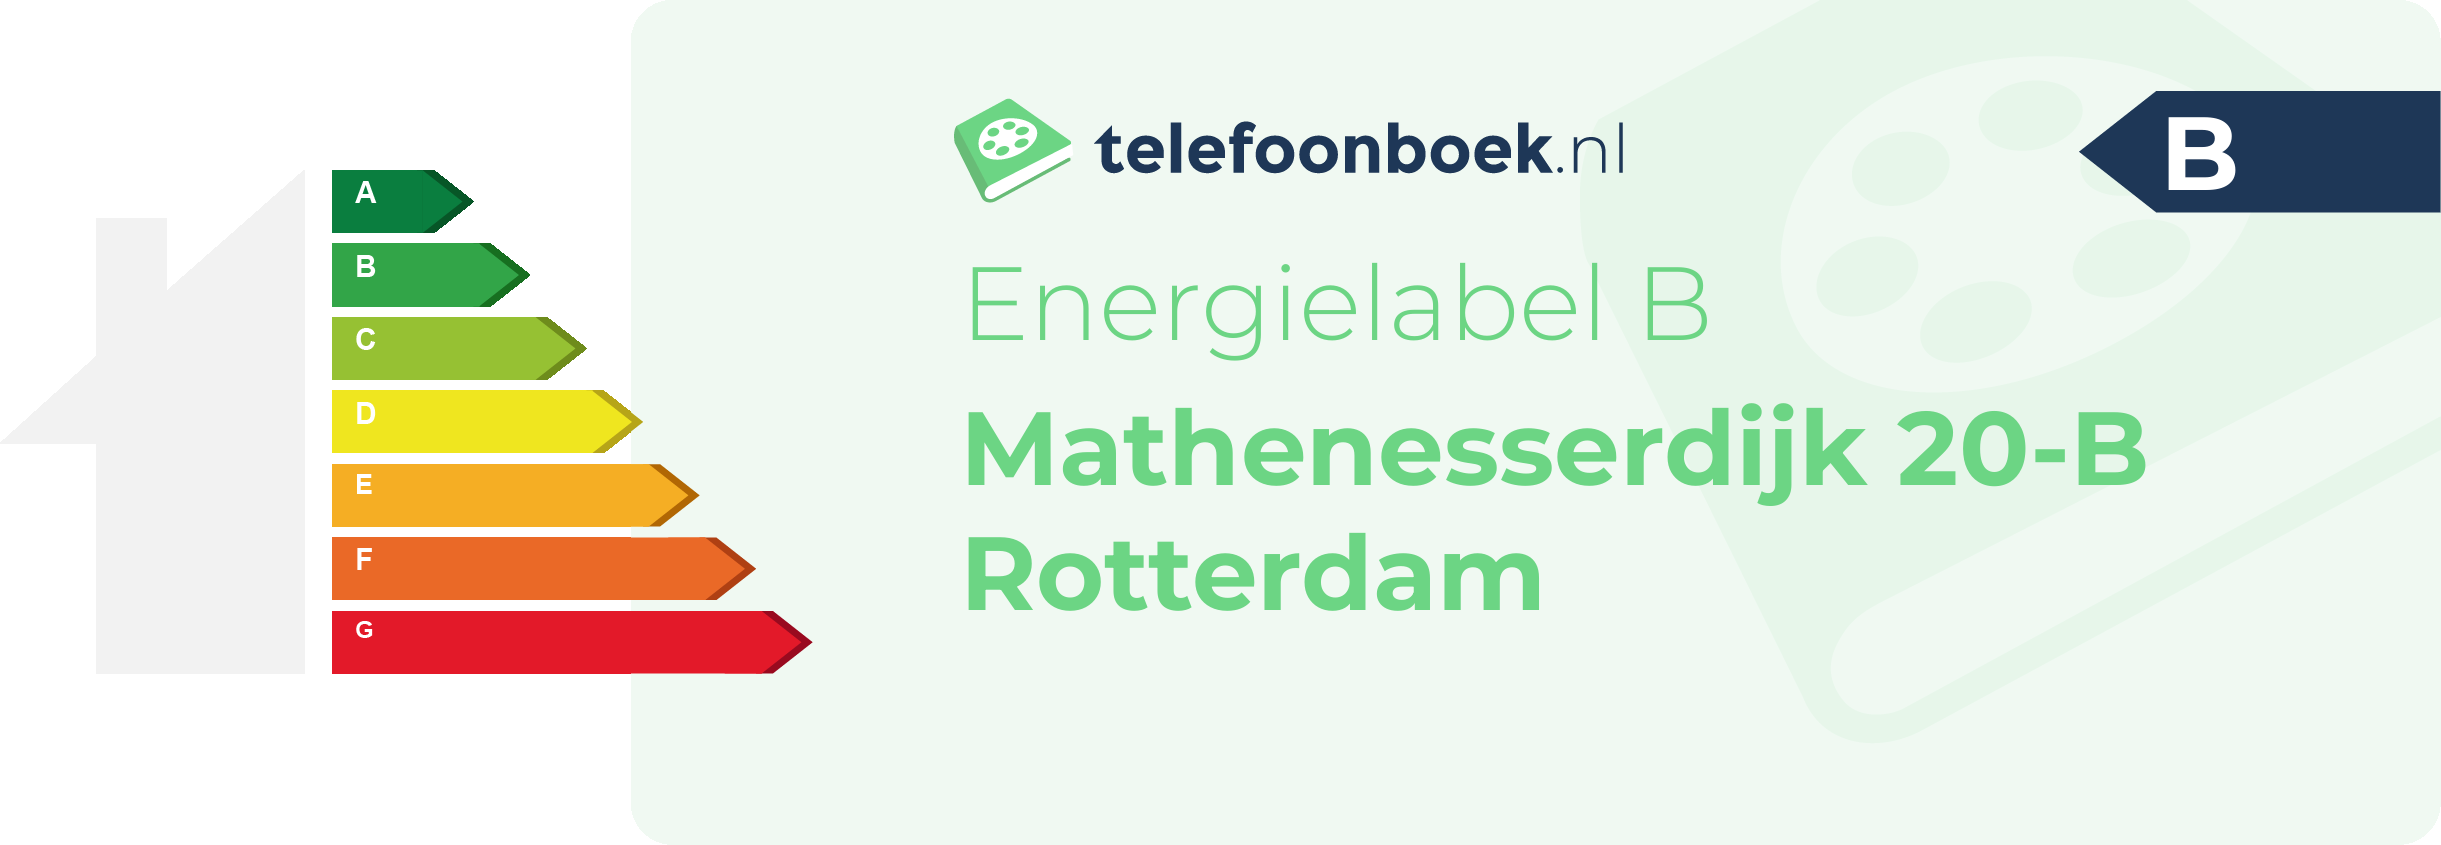 Energielabel Mathenesserdijk 20-B Rotterdam